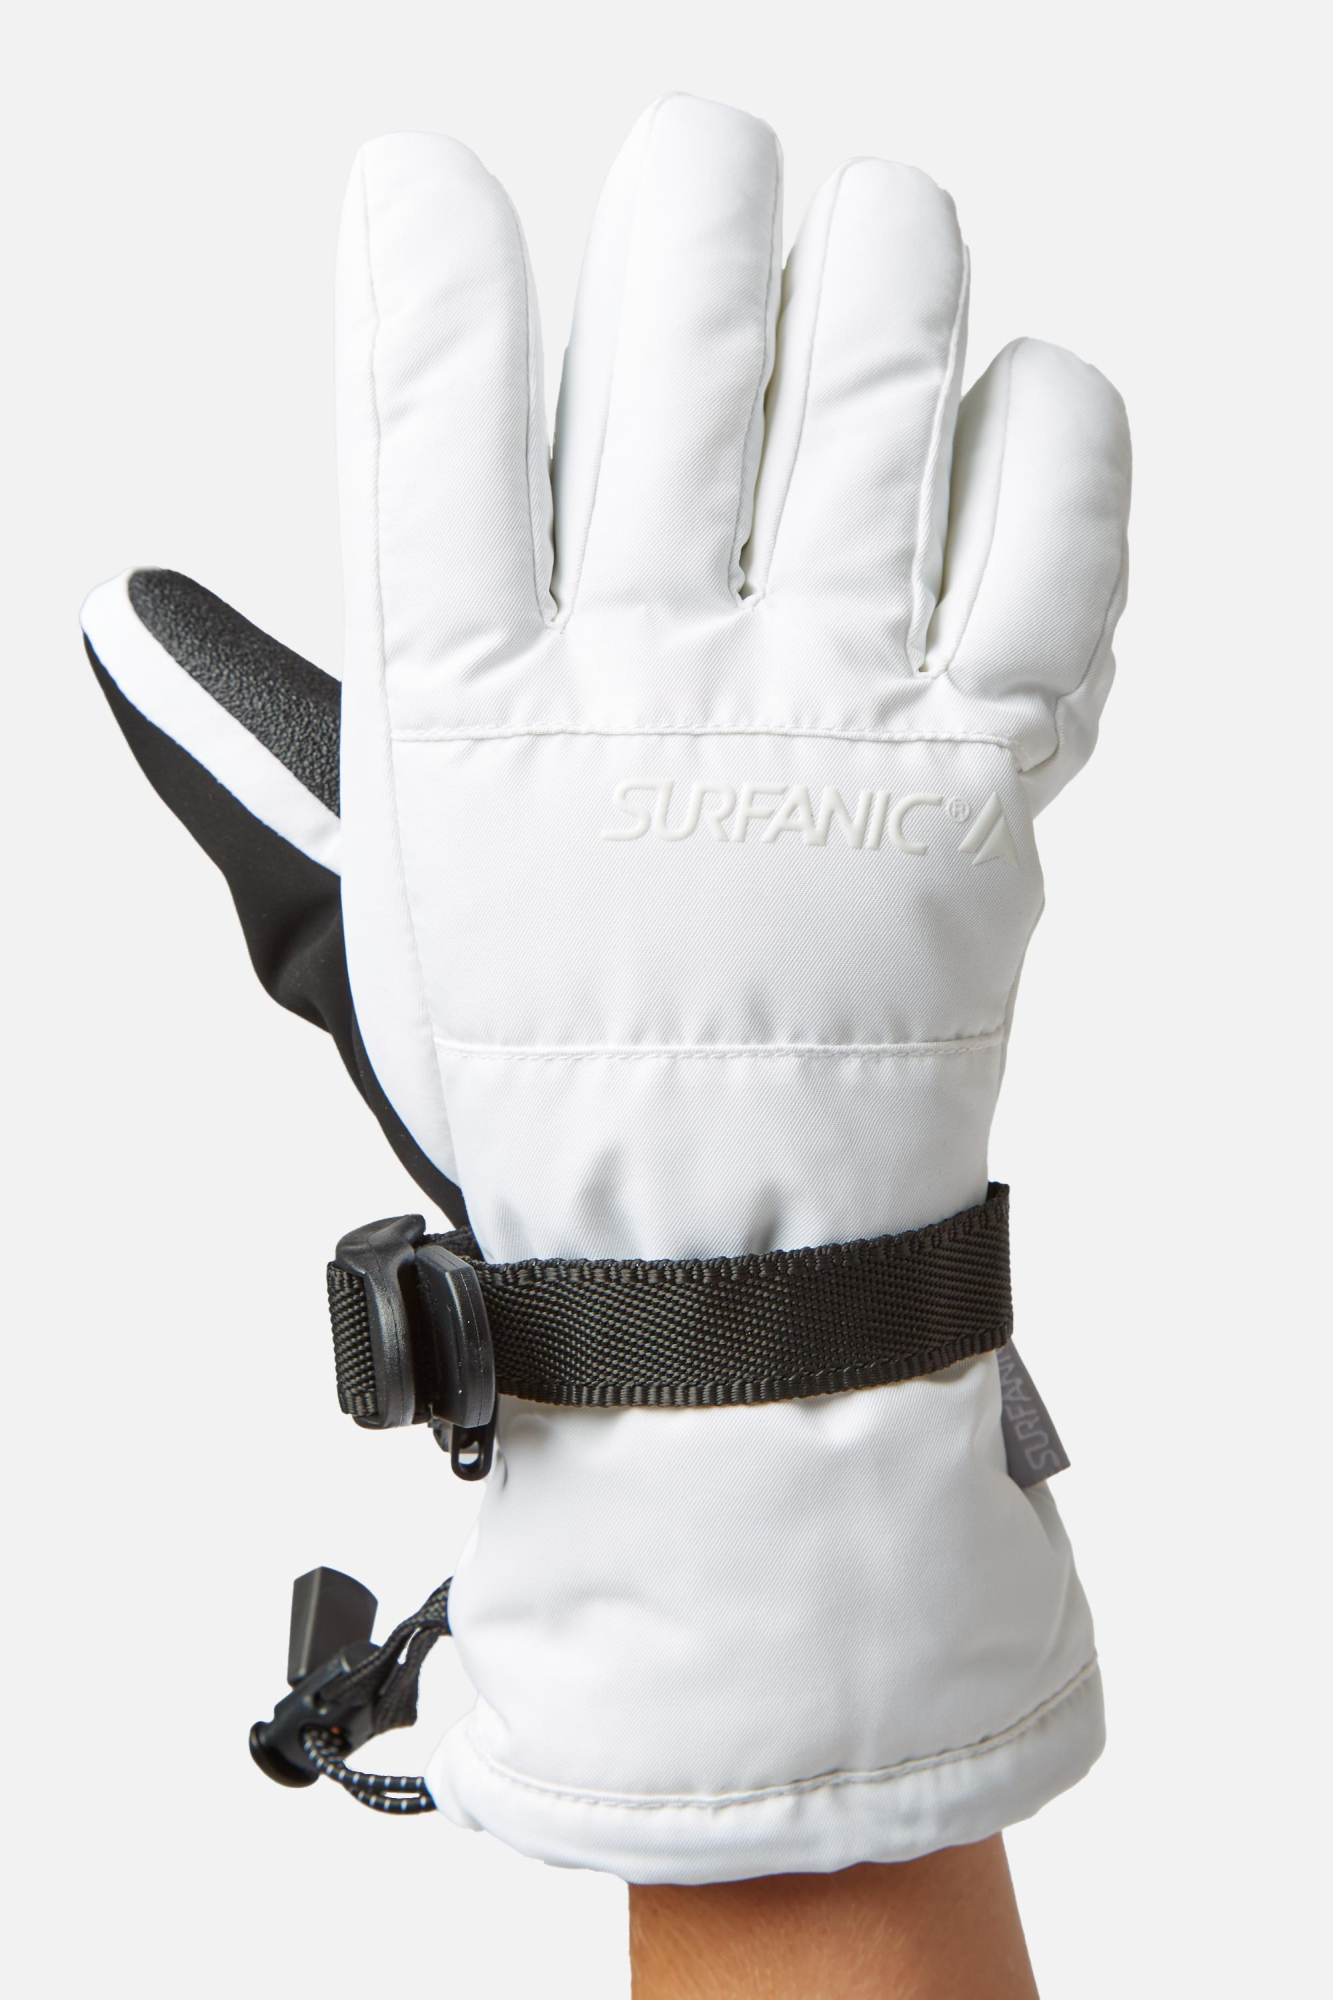 Surfanic Womens Alaska Glove White - Size: Large